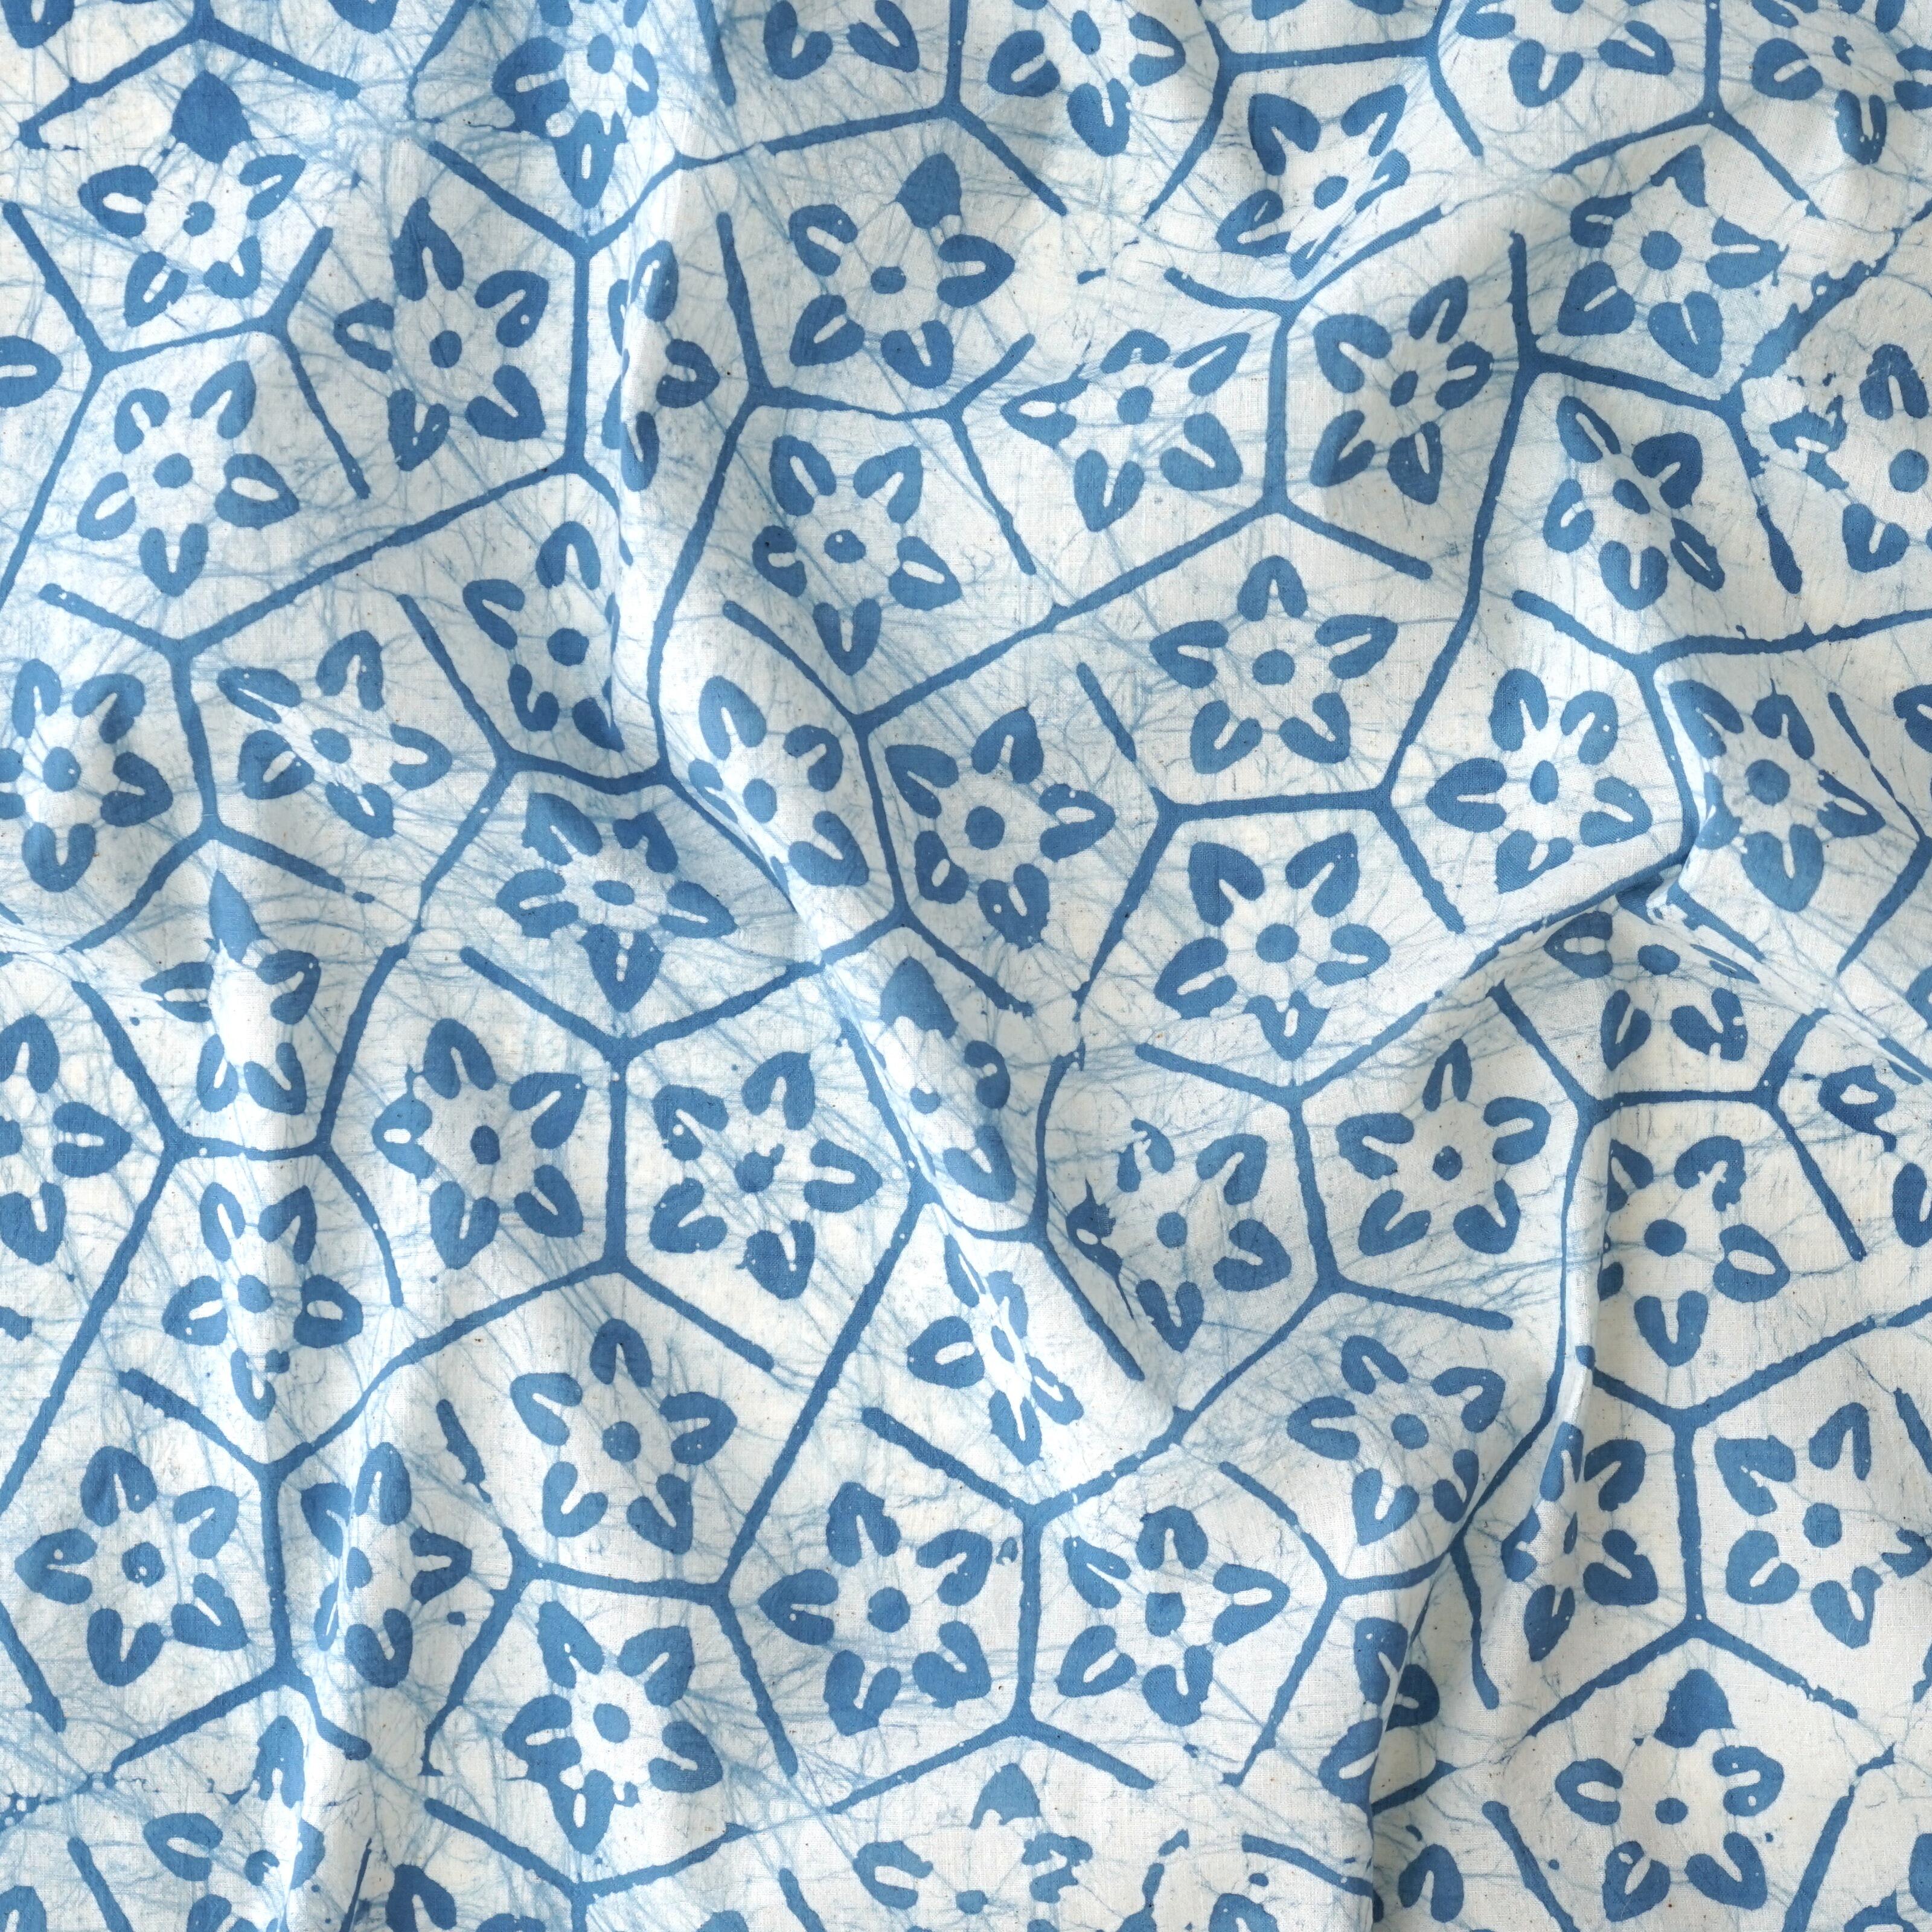 Block-Printed Batik Fabric - Cotton Cloth - Reactive Dyes - Ice Blast Design - Contrast